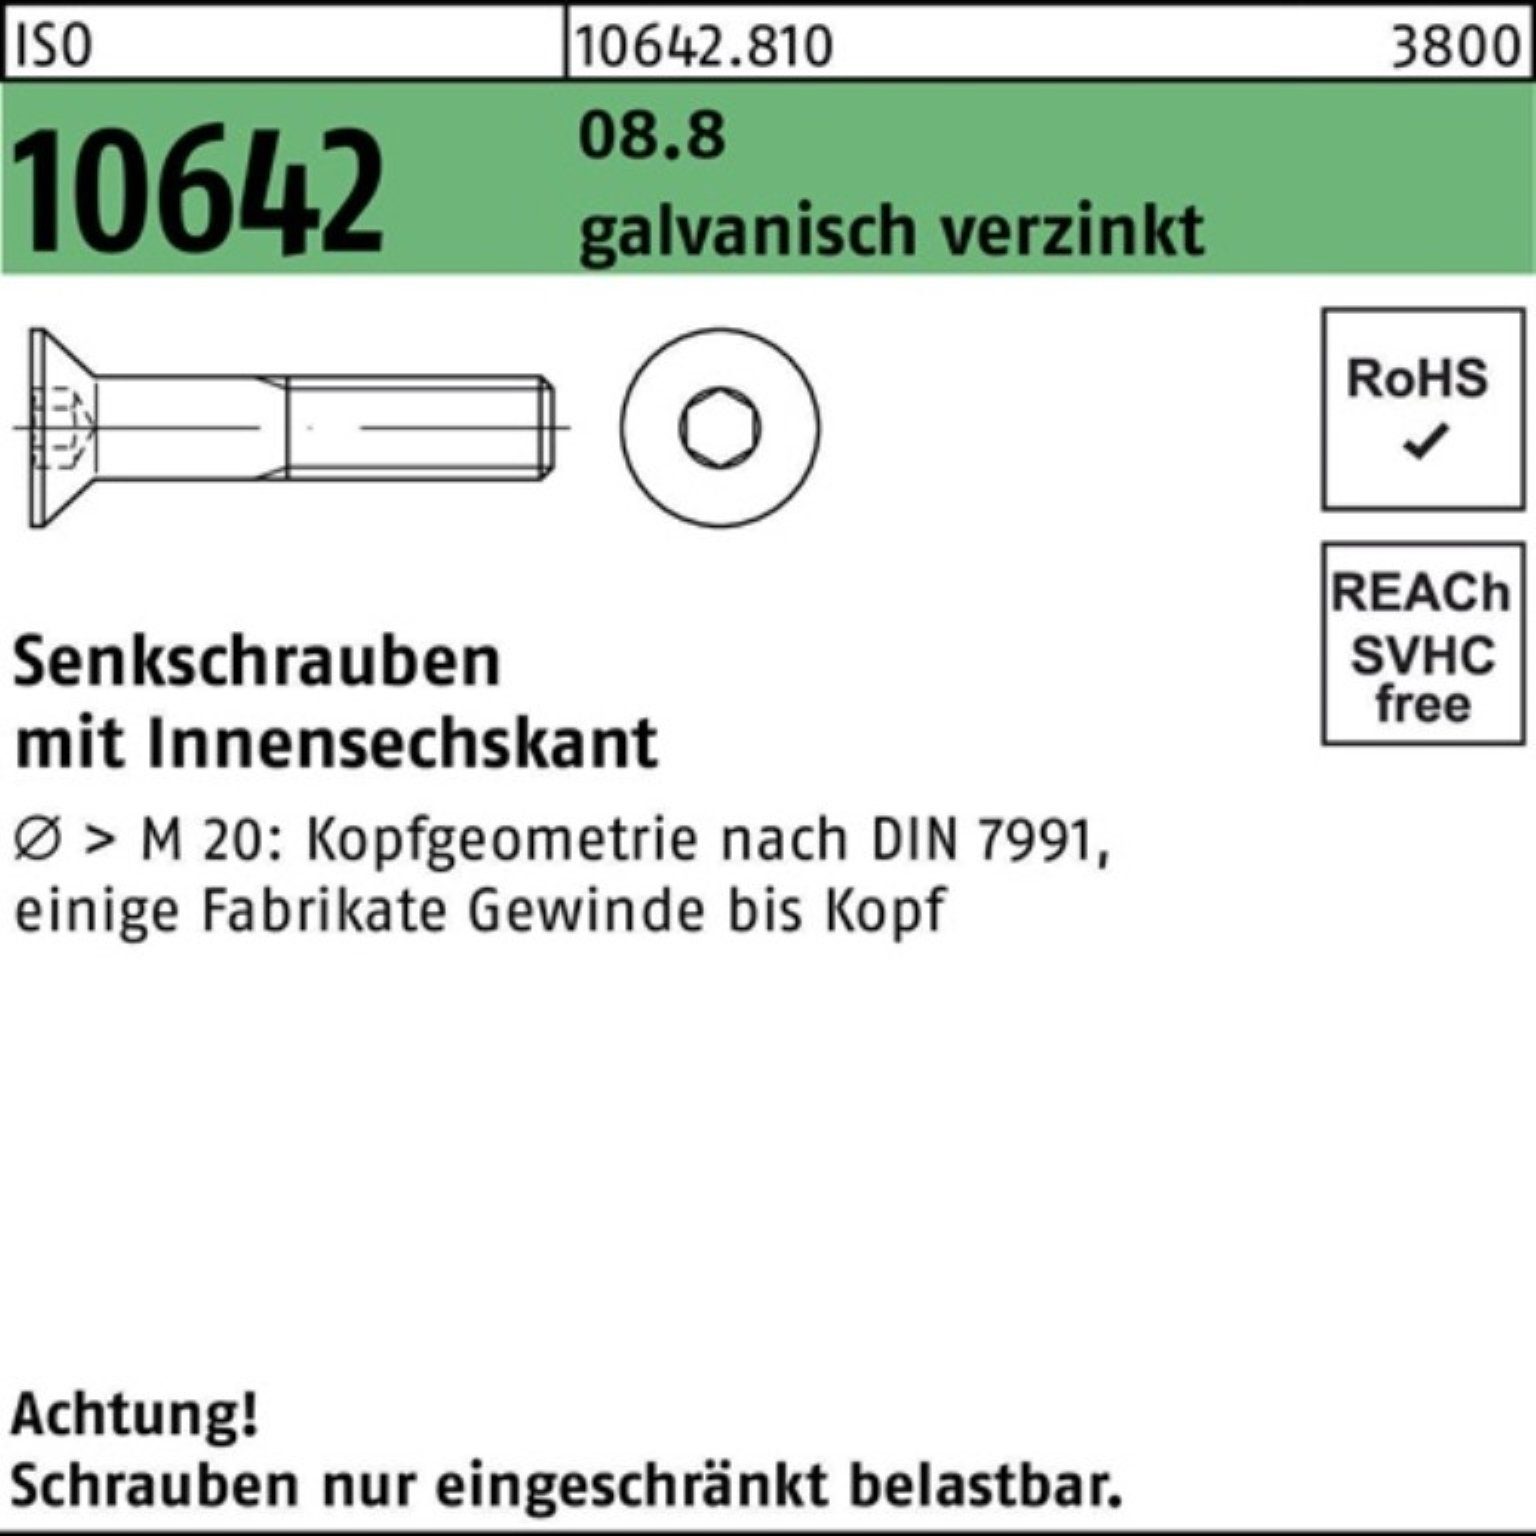 8.8 M8x Pack Reyher 25 200er ISO 200 Senkschraube Innen-6kt galv.verz. 10642 Senkschraube